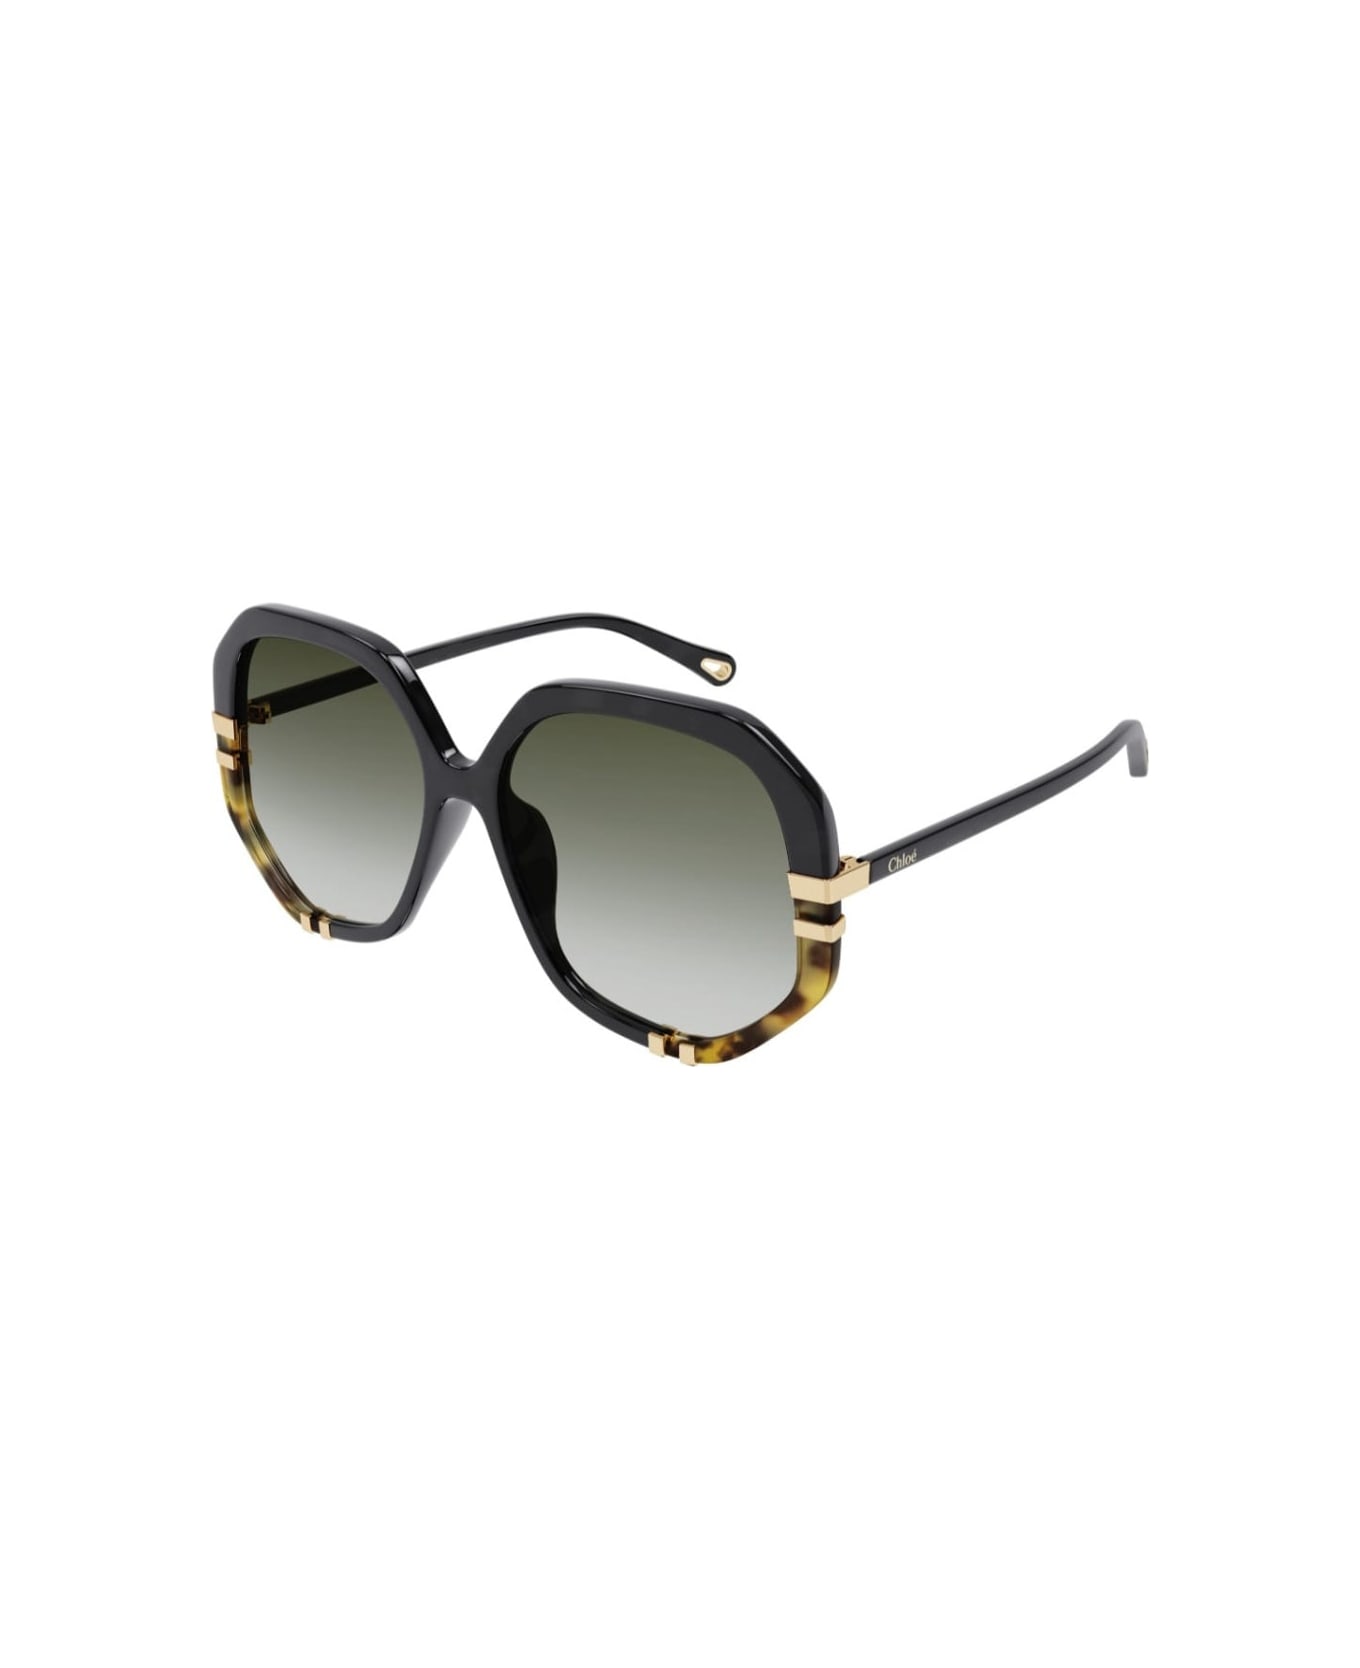 Chloé Eyewear CH0105S 002 Sunglasses - Black and tortoise サングラス